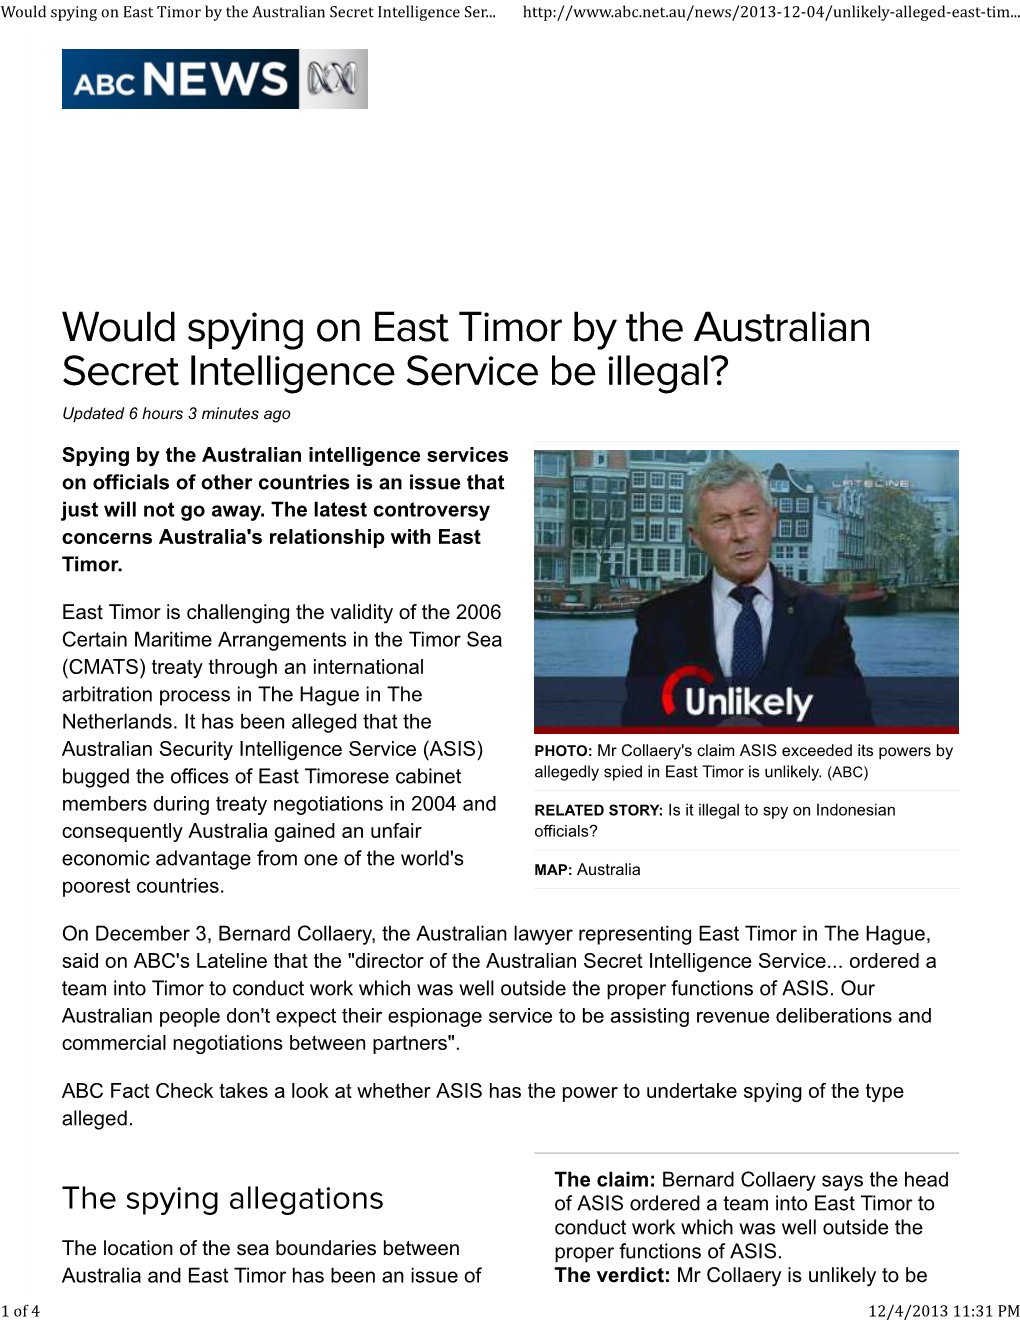 Would Spying on East Timor by the Australian Secret Intelligence Ser